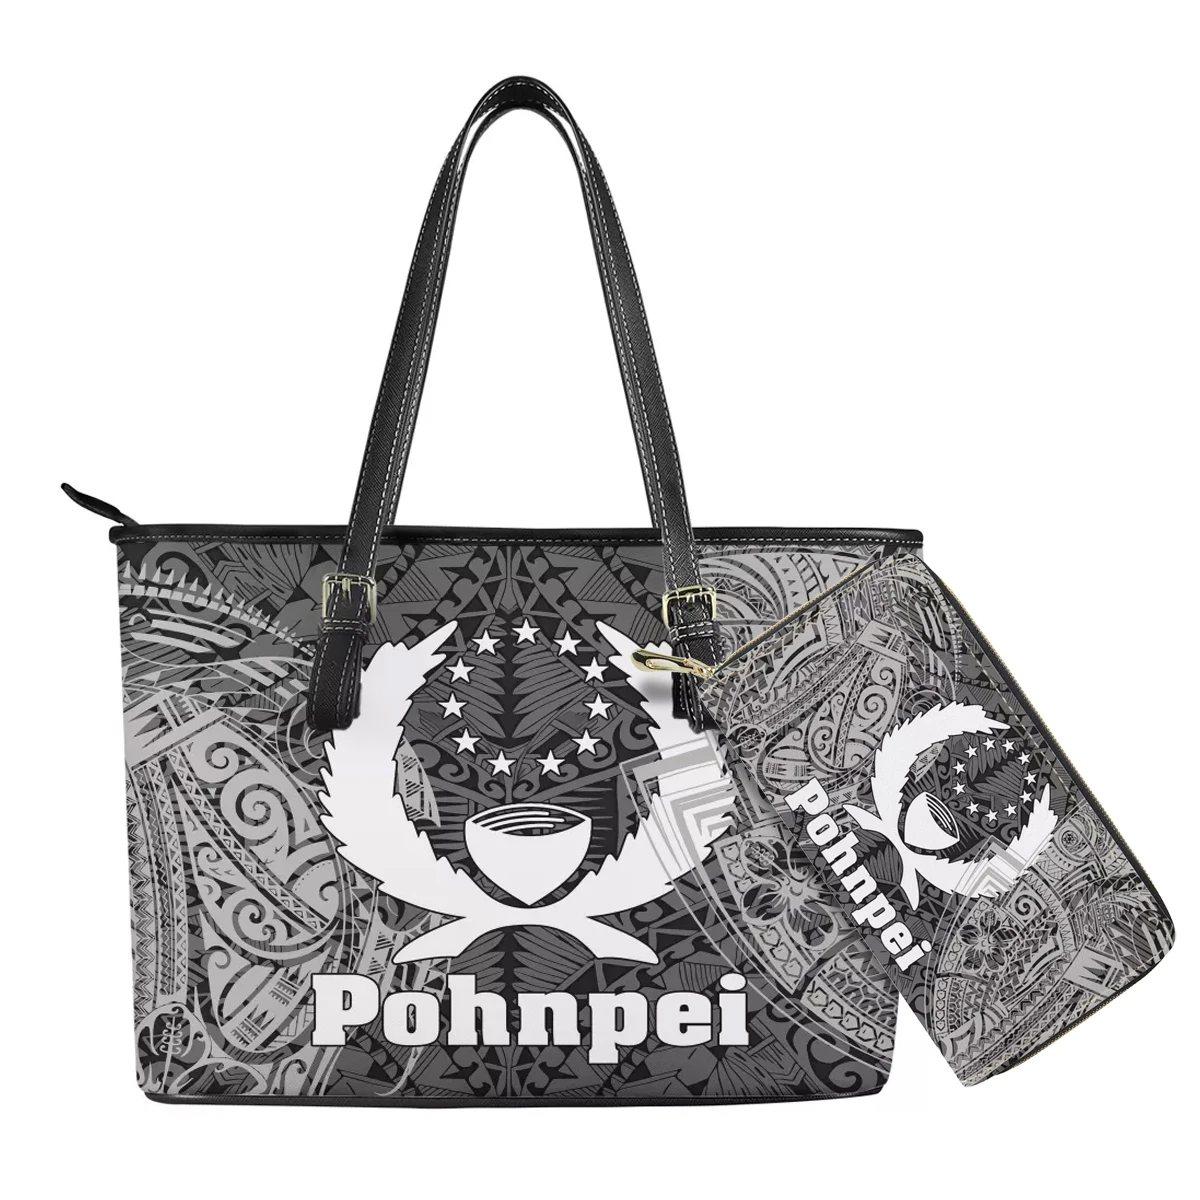 

Wholesale PU leather purse and wallet Pohnpei print handbags and purses(2pcs/set)Luxury design lady travel bag custom logo, Customizable